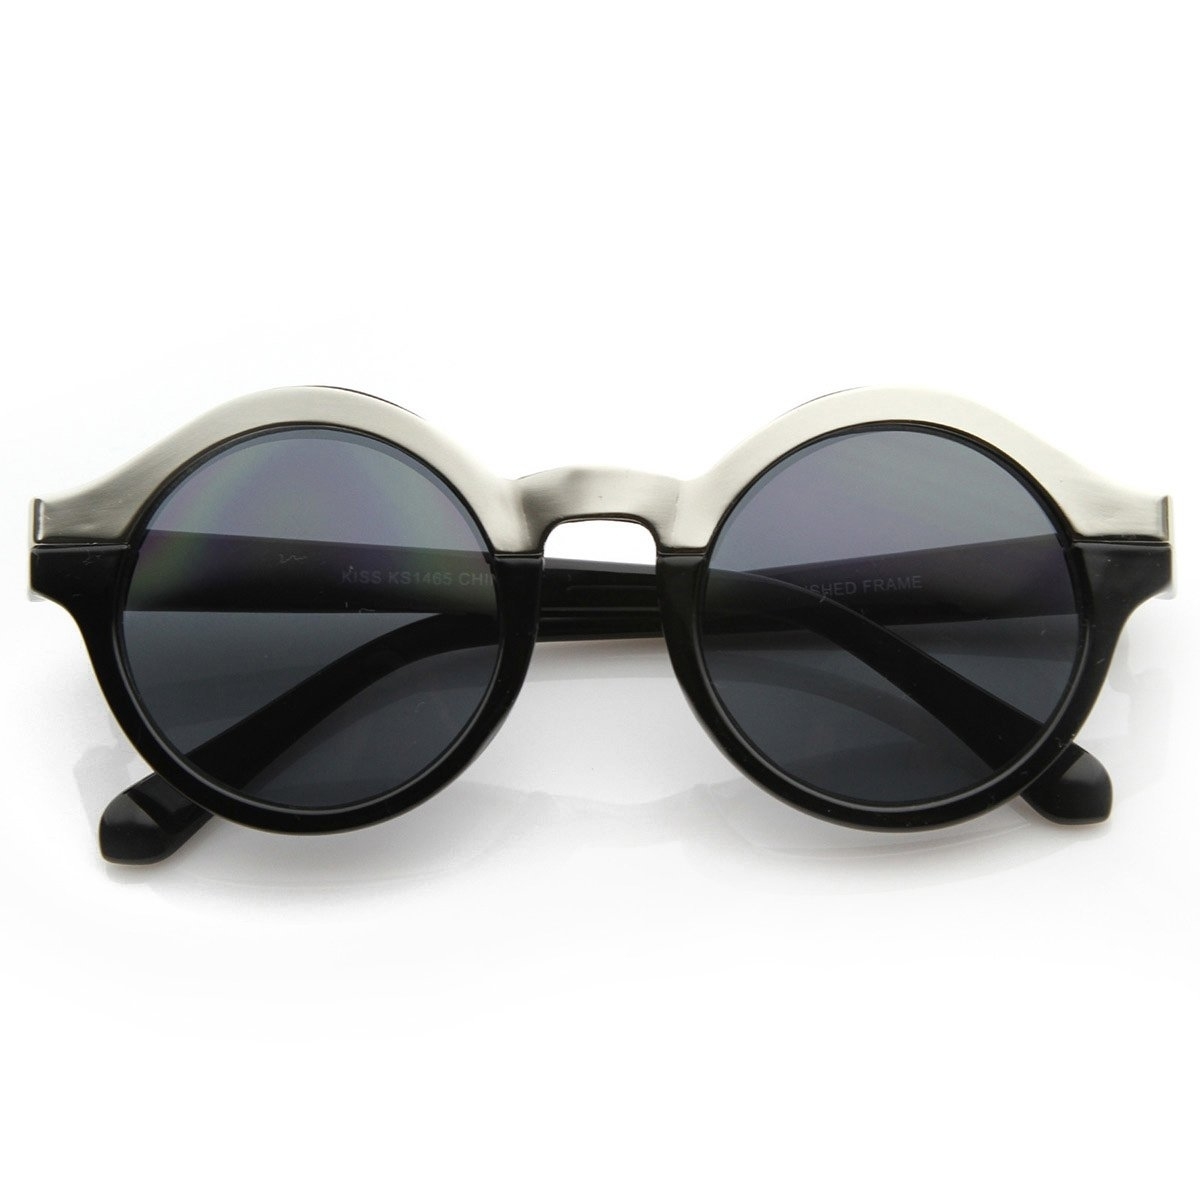 Vintage Inspired Retro Fashion Round Horned Circle Sunglasses - Black-Gold